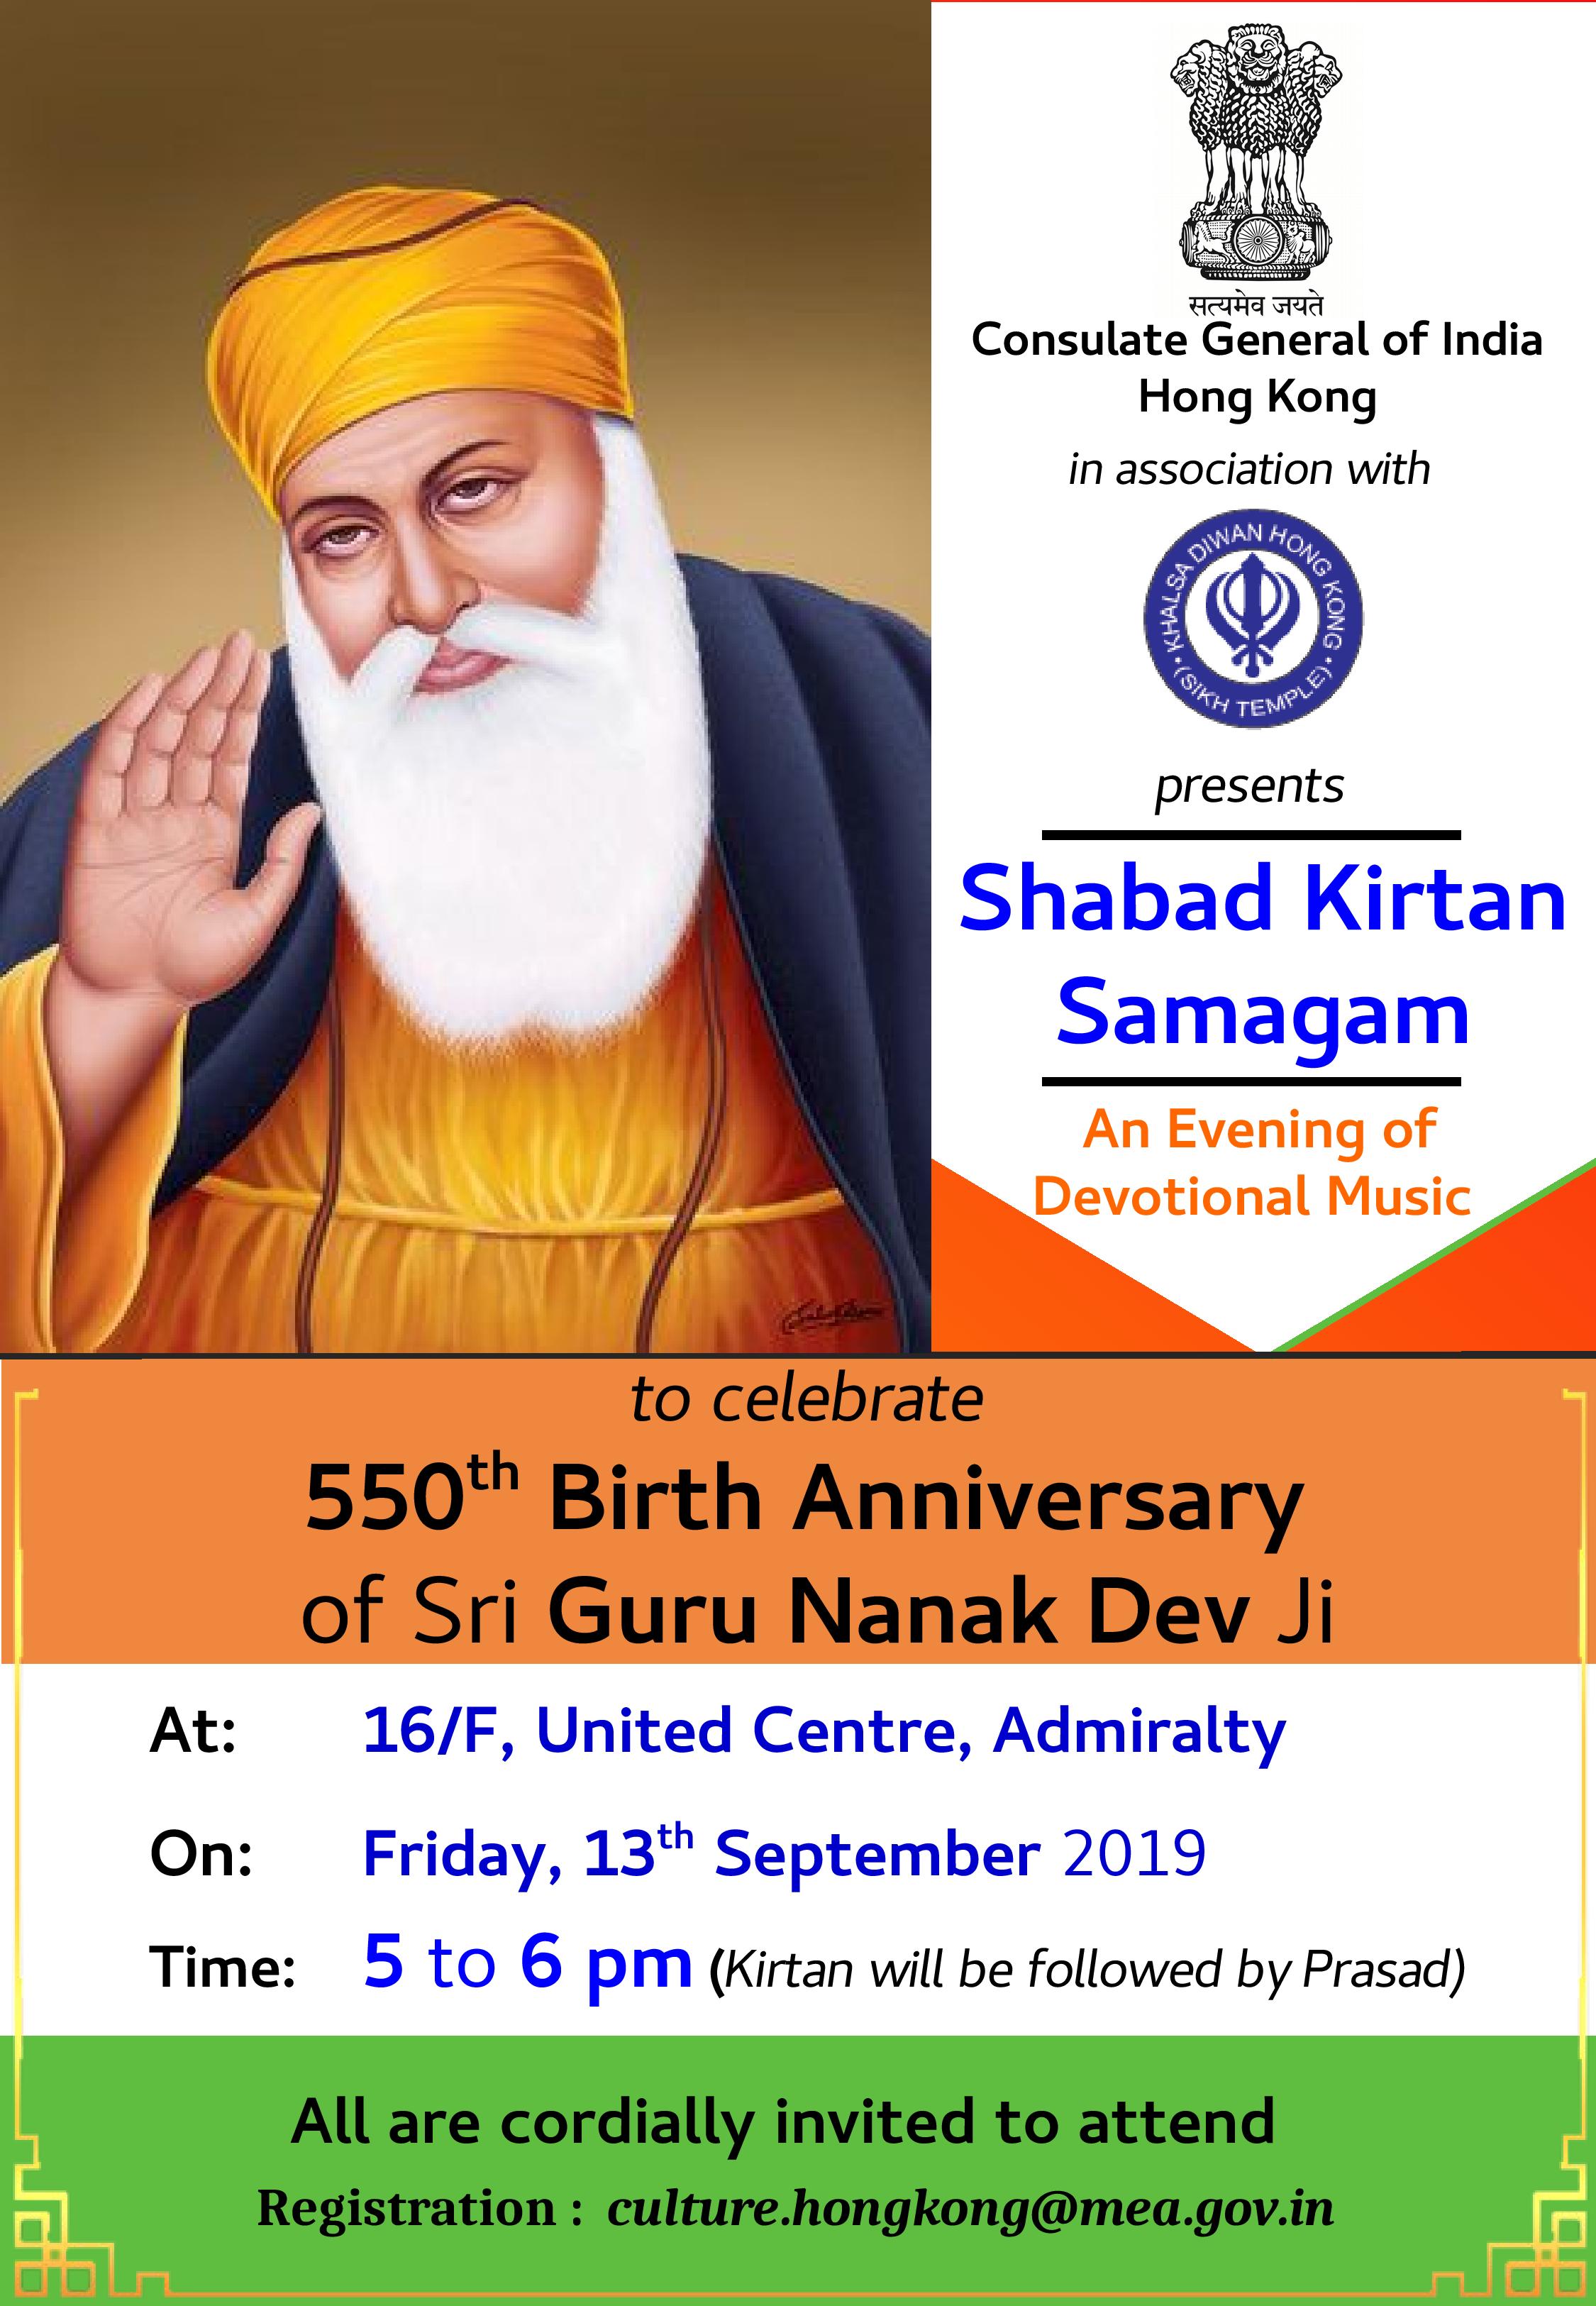 Shabad Kirtan Samagam: An Evening of Devotional Music to celebrate the 550th Birth Anniversary of Guru Nanak Devji